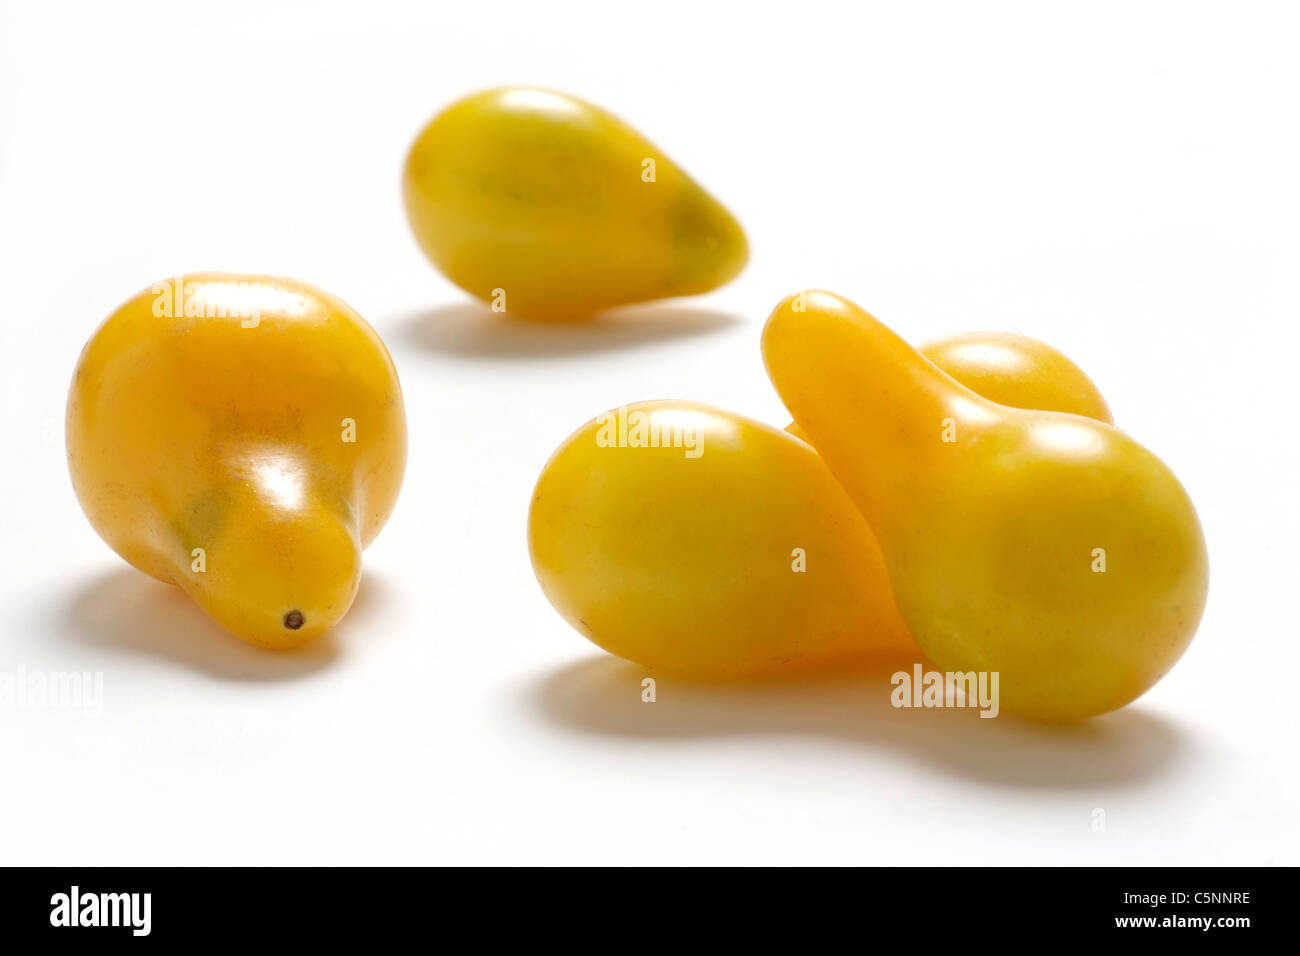 Tomato varieties: pear shaped yellow cherry tomato Stock Photo